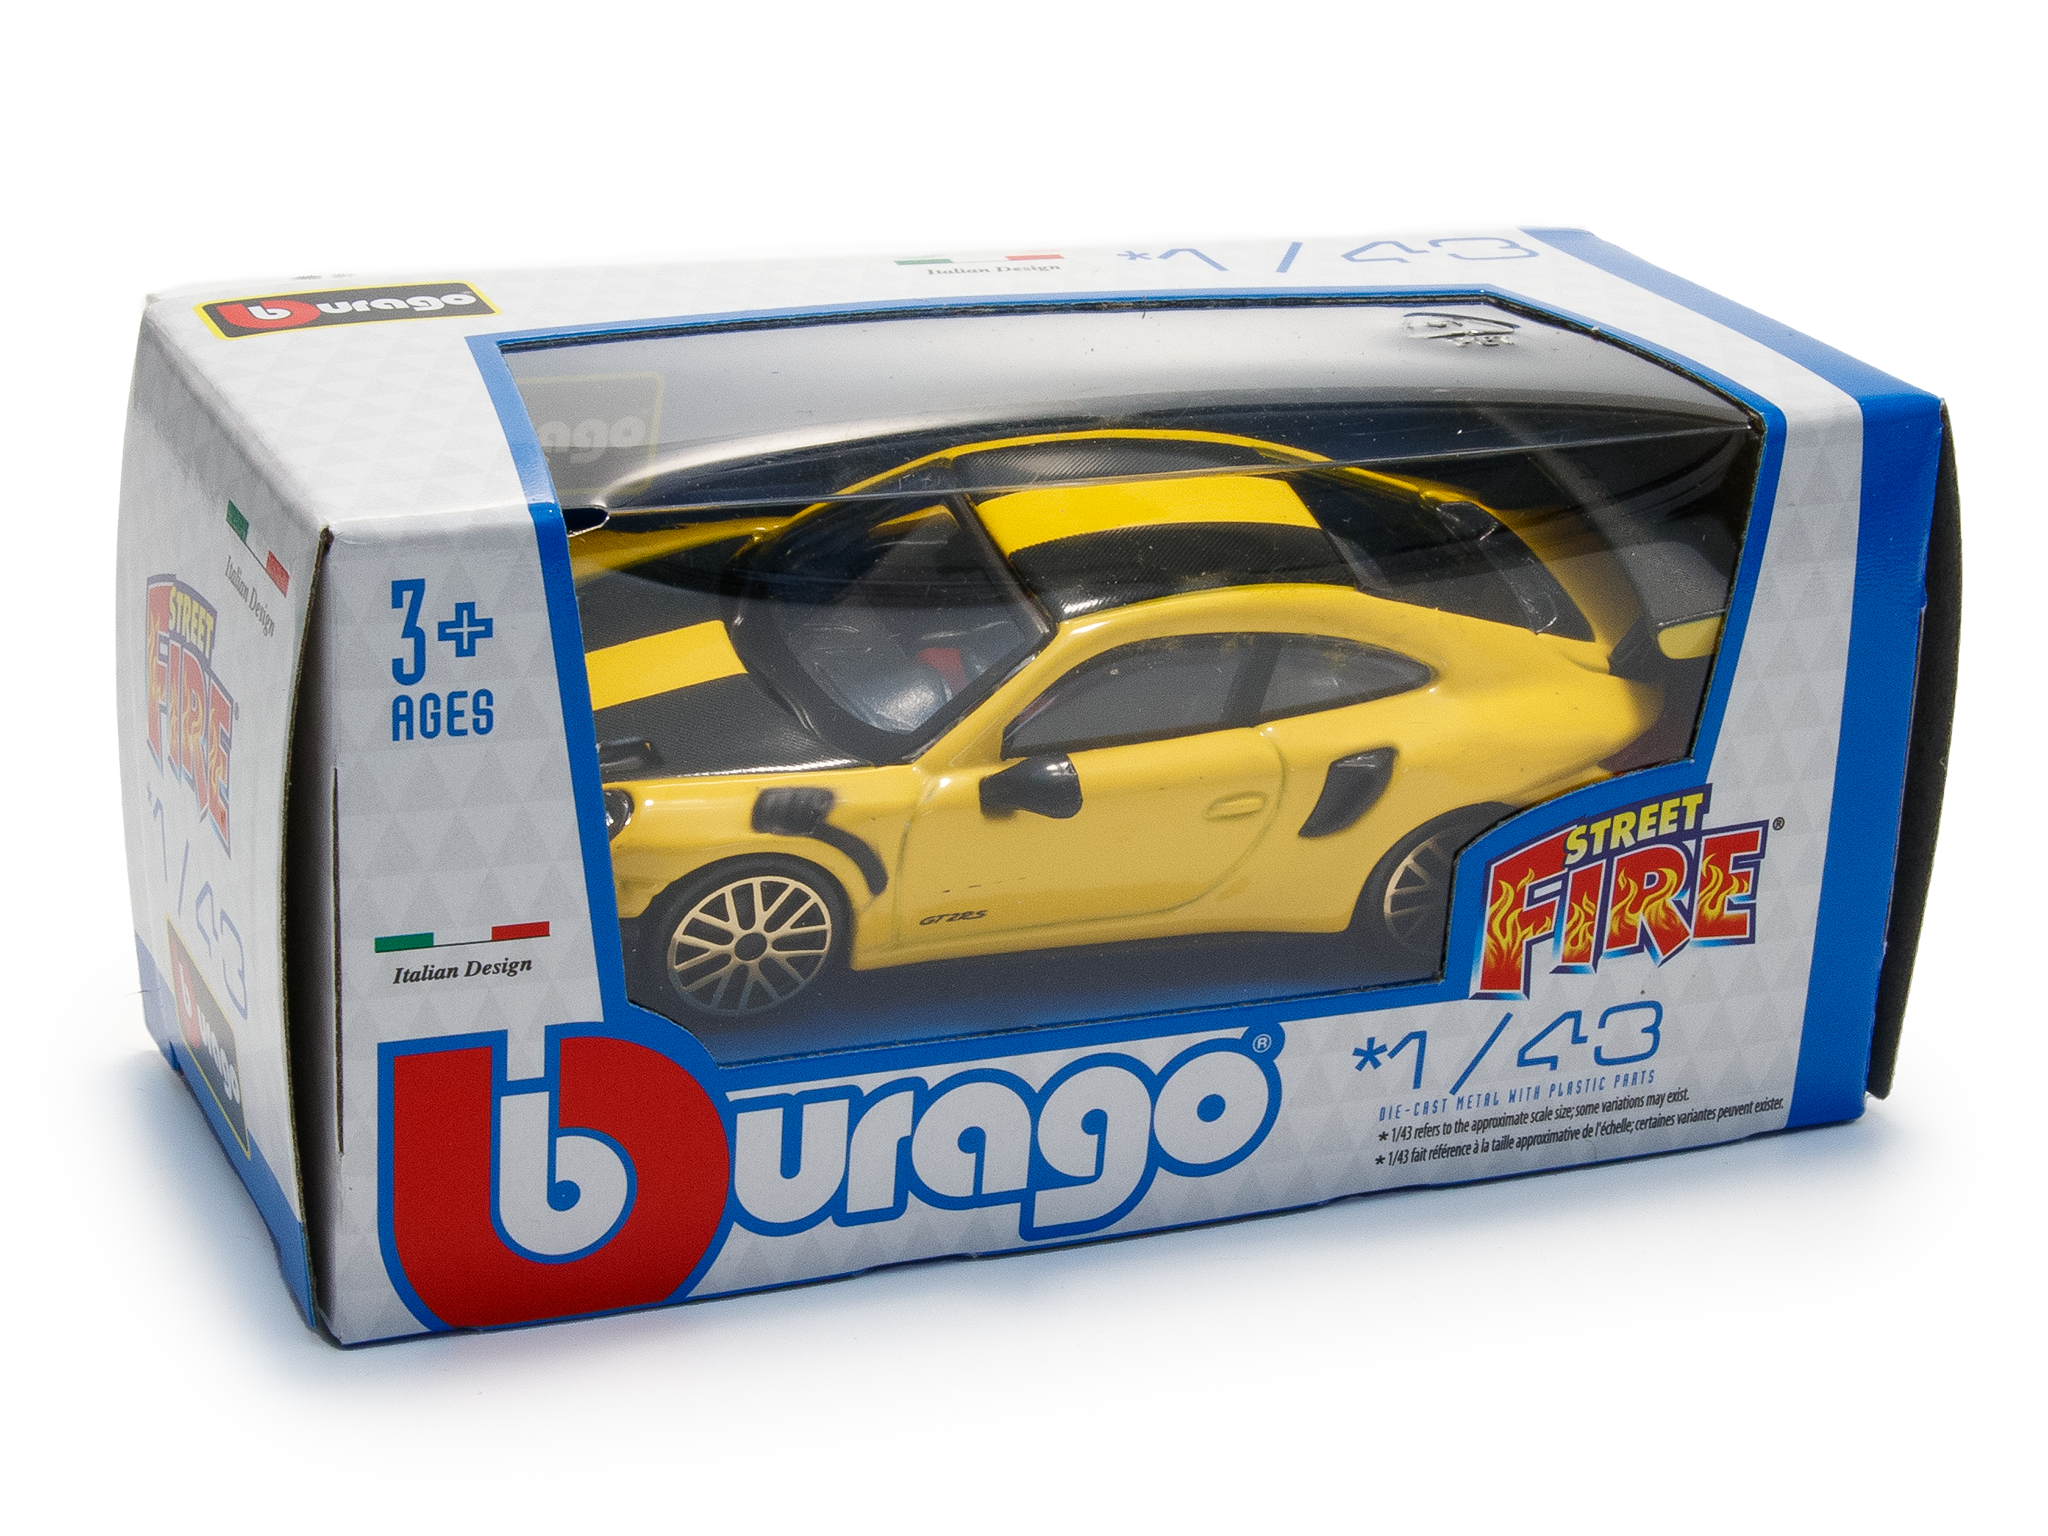 Porsche 911 GT2 RS yellow - 1:43 Scale Diecast Toy Car